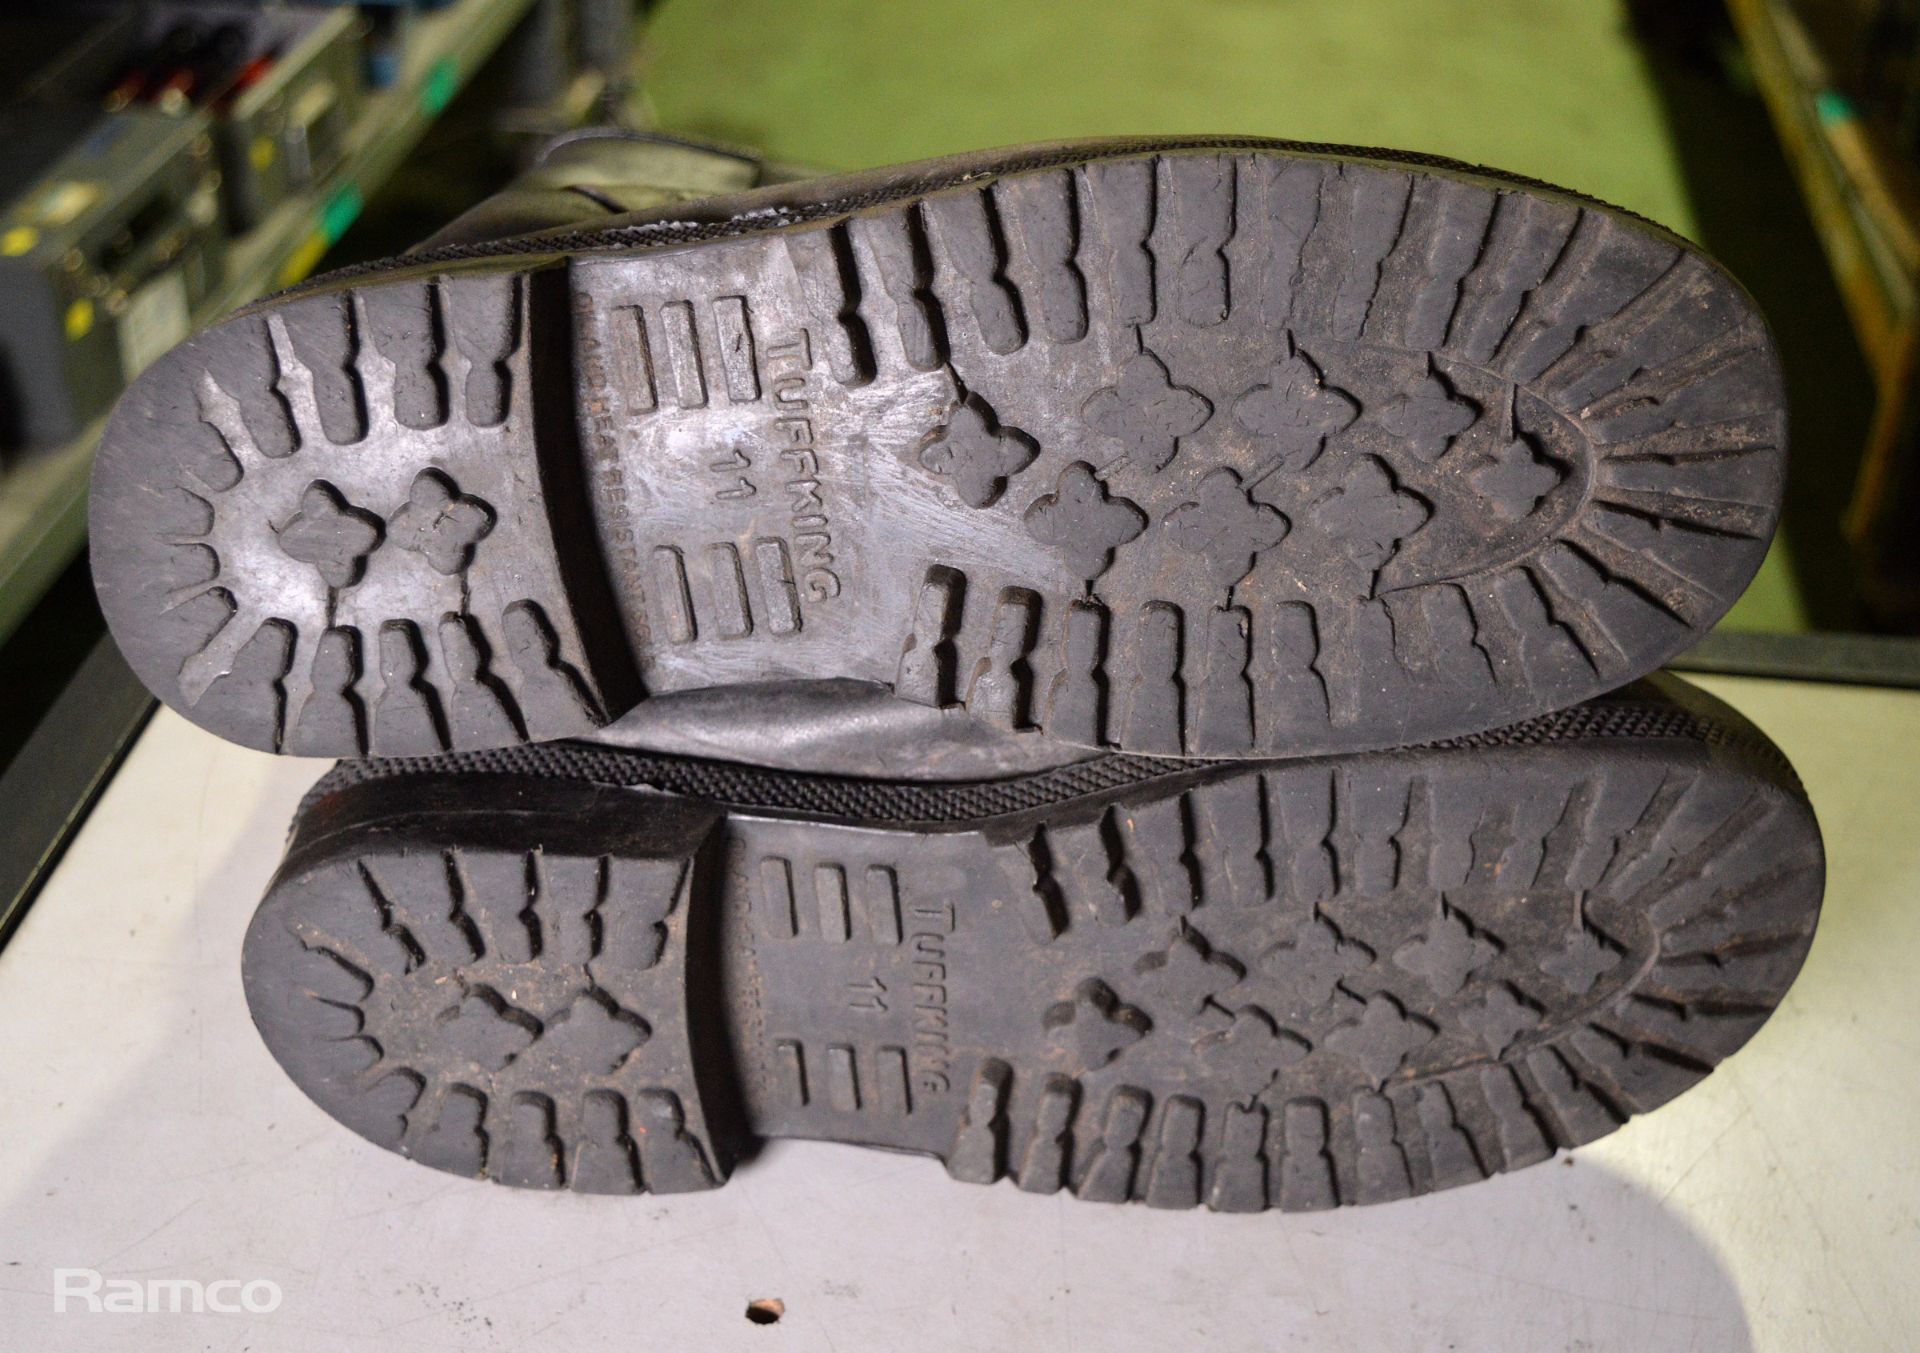 Tuffking Fire Retardant Boots, Size 11 - Image 2 of 3